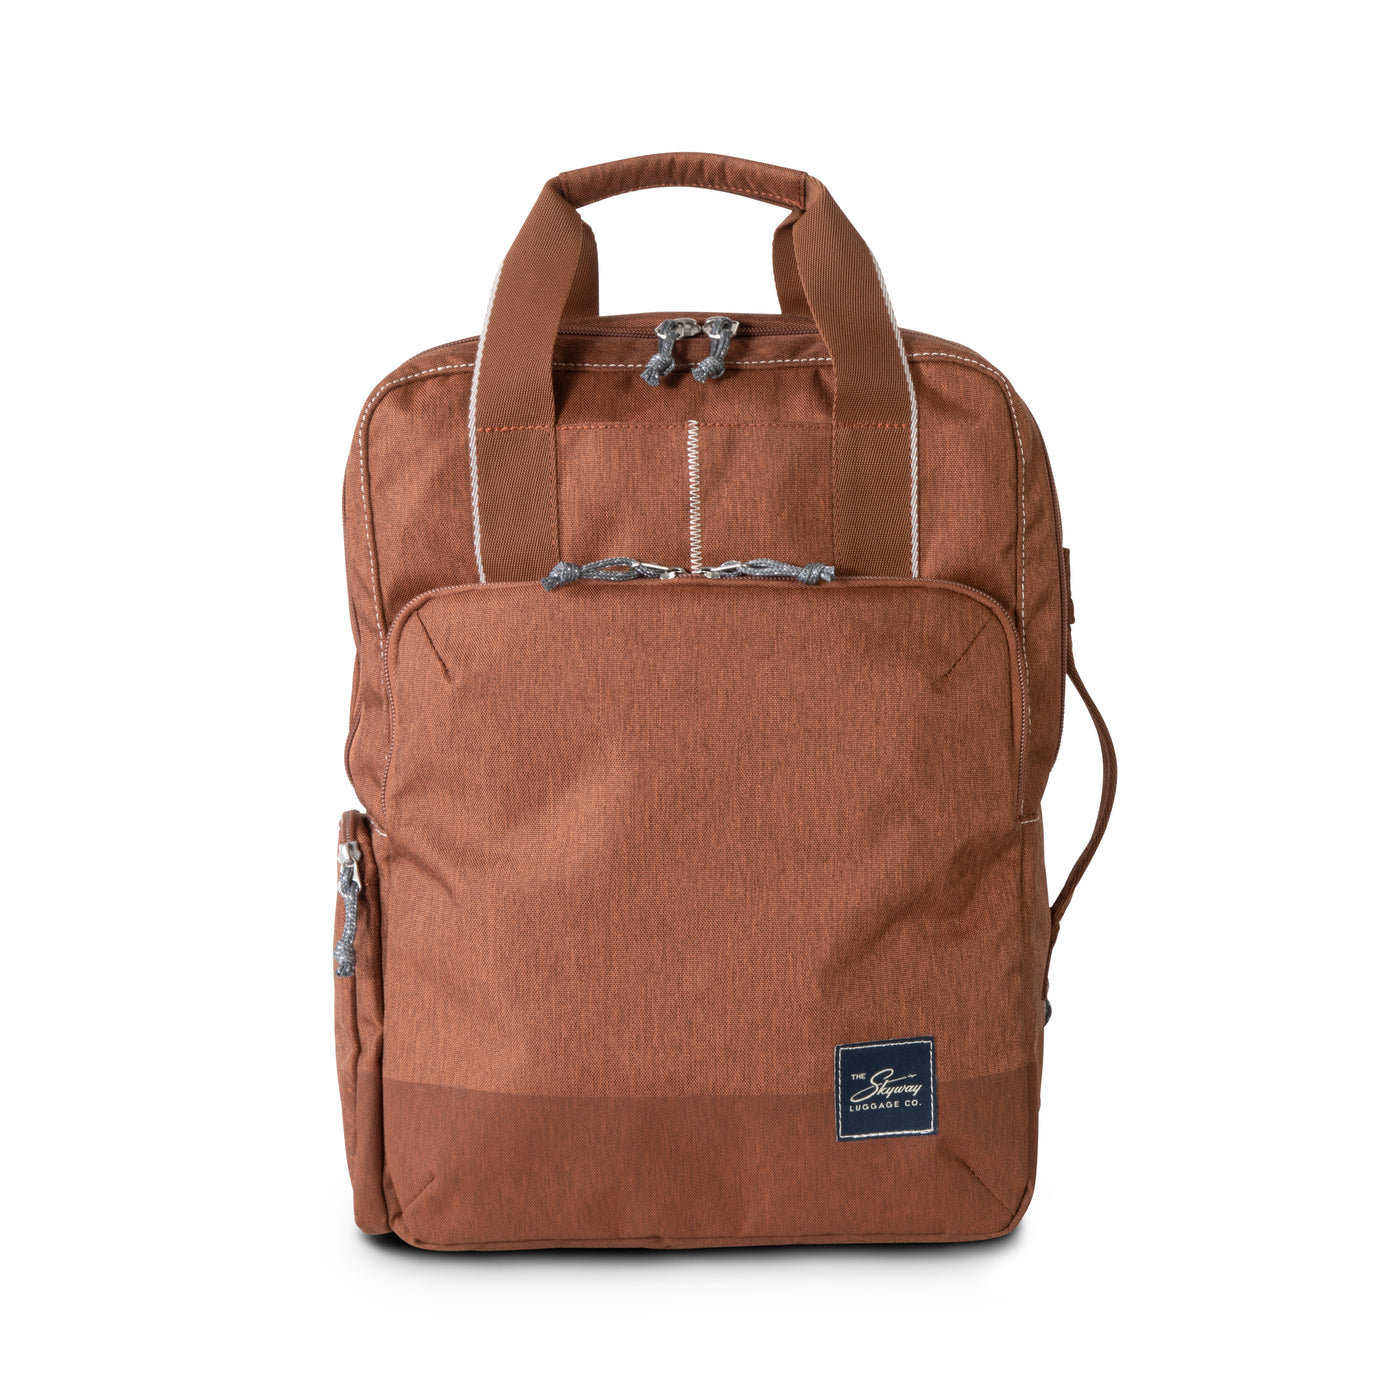 Rainier Deluxe Backpack - 17L